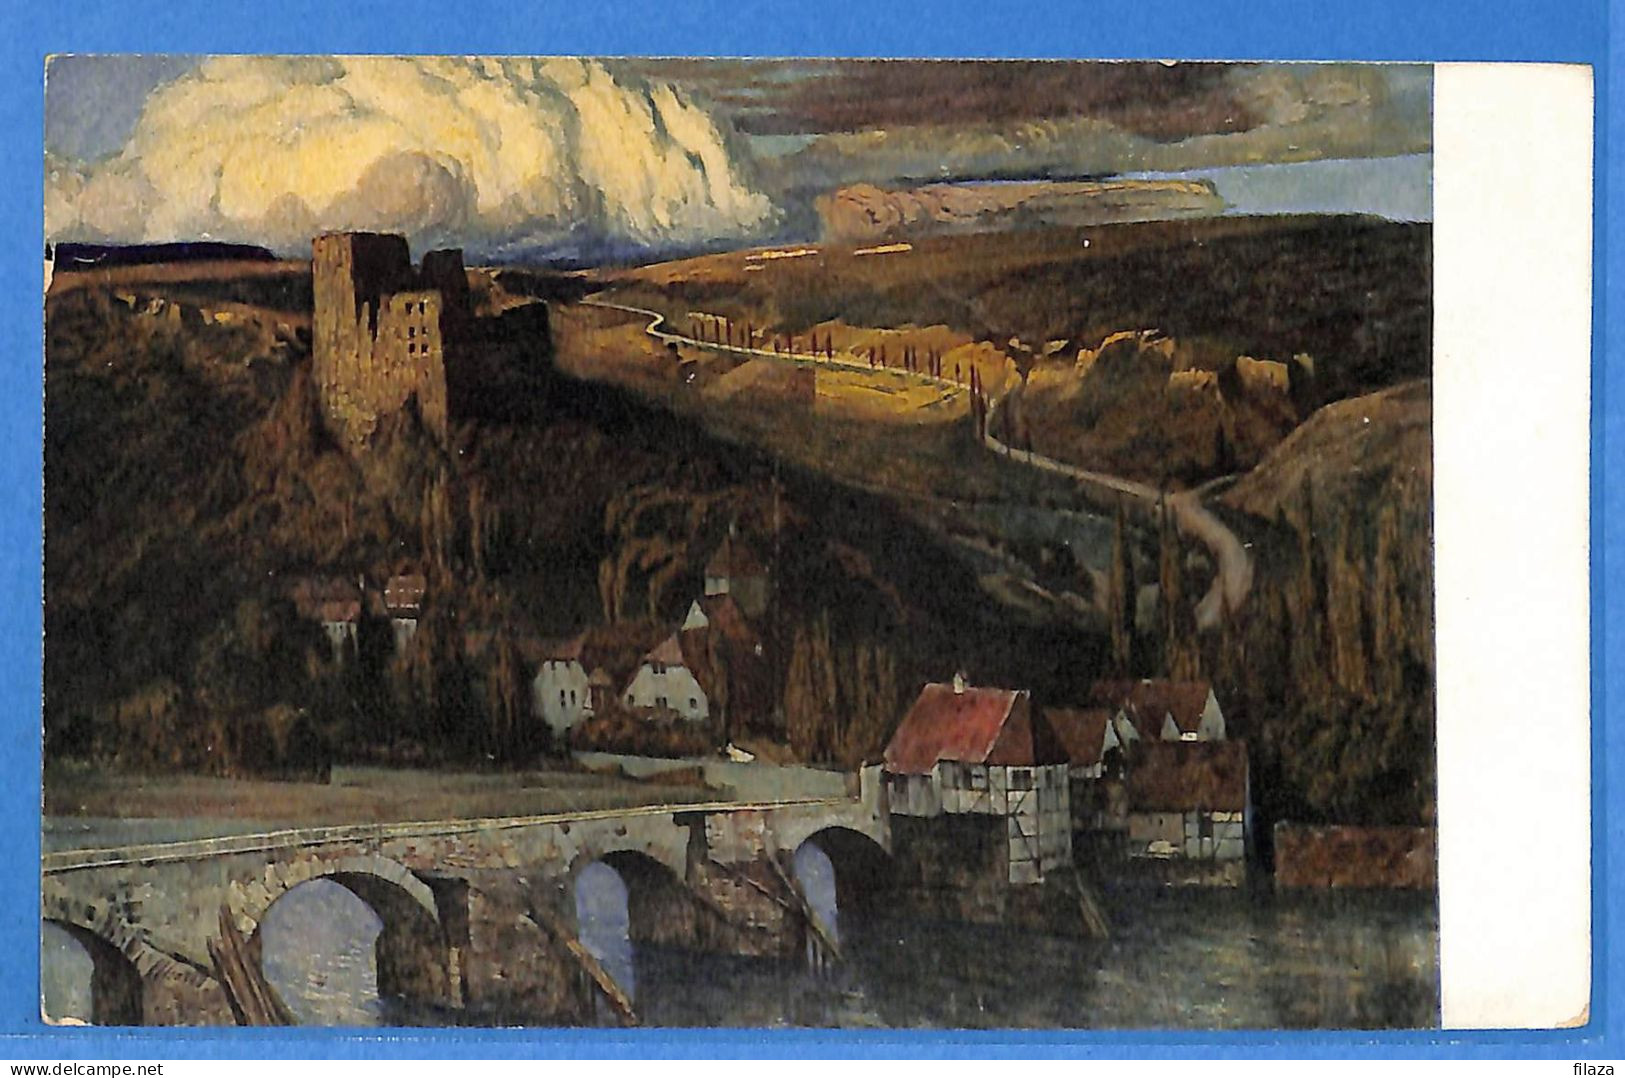 Saar - 1952 - Carte Postale De Neunkirchen - G31859 - Lettres & Documents